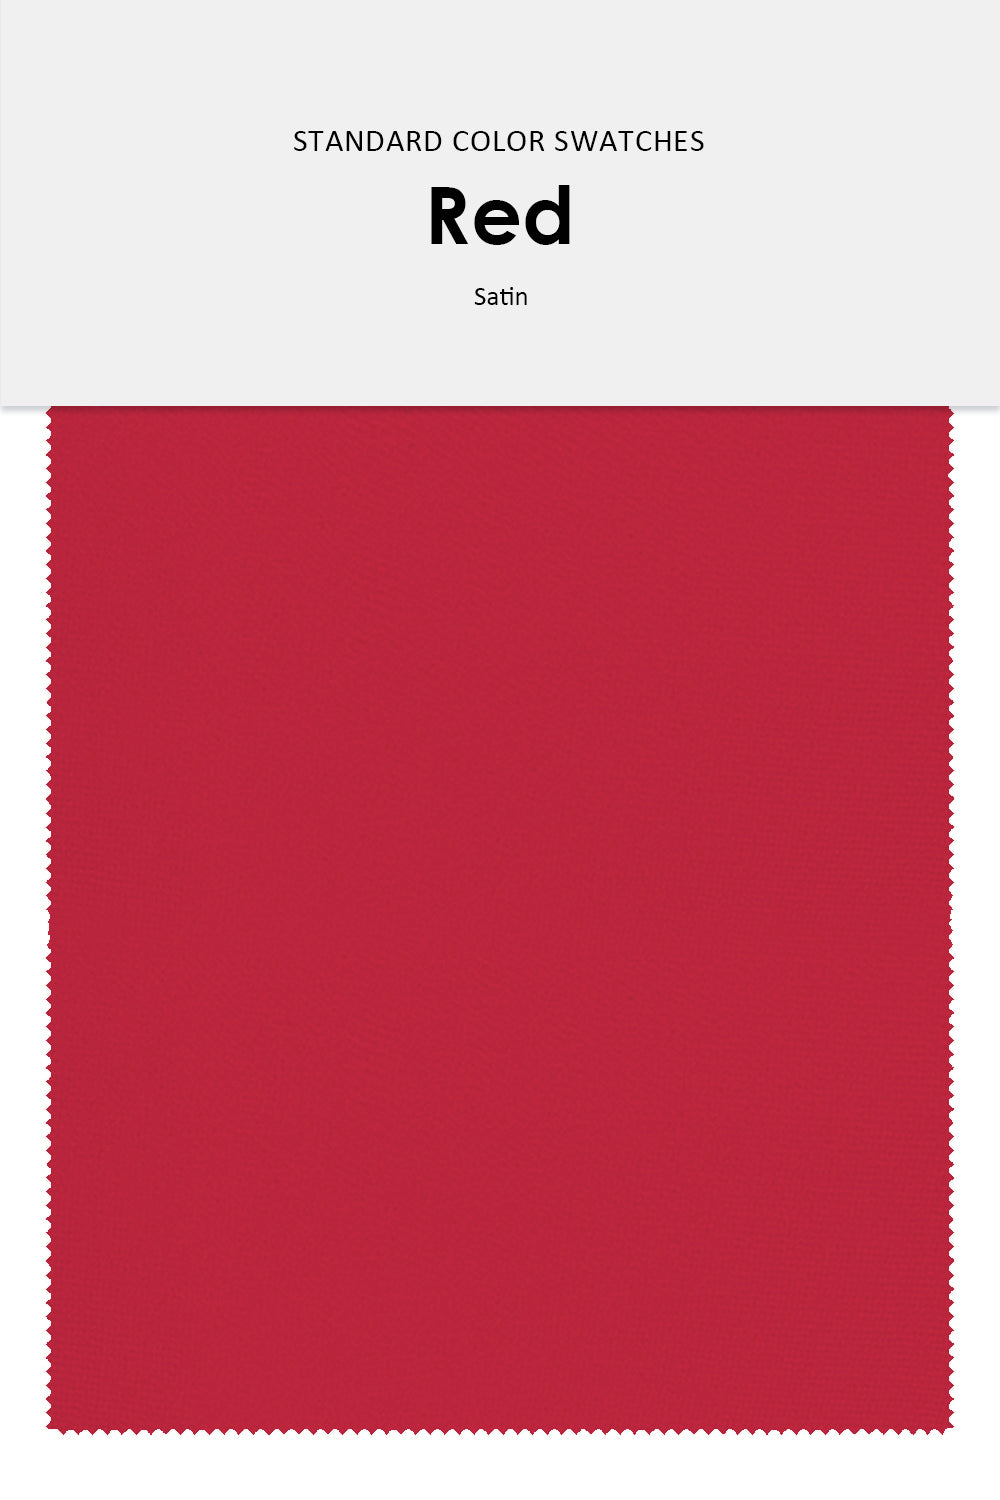 Red Satin Fabric